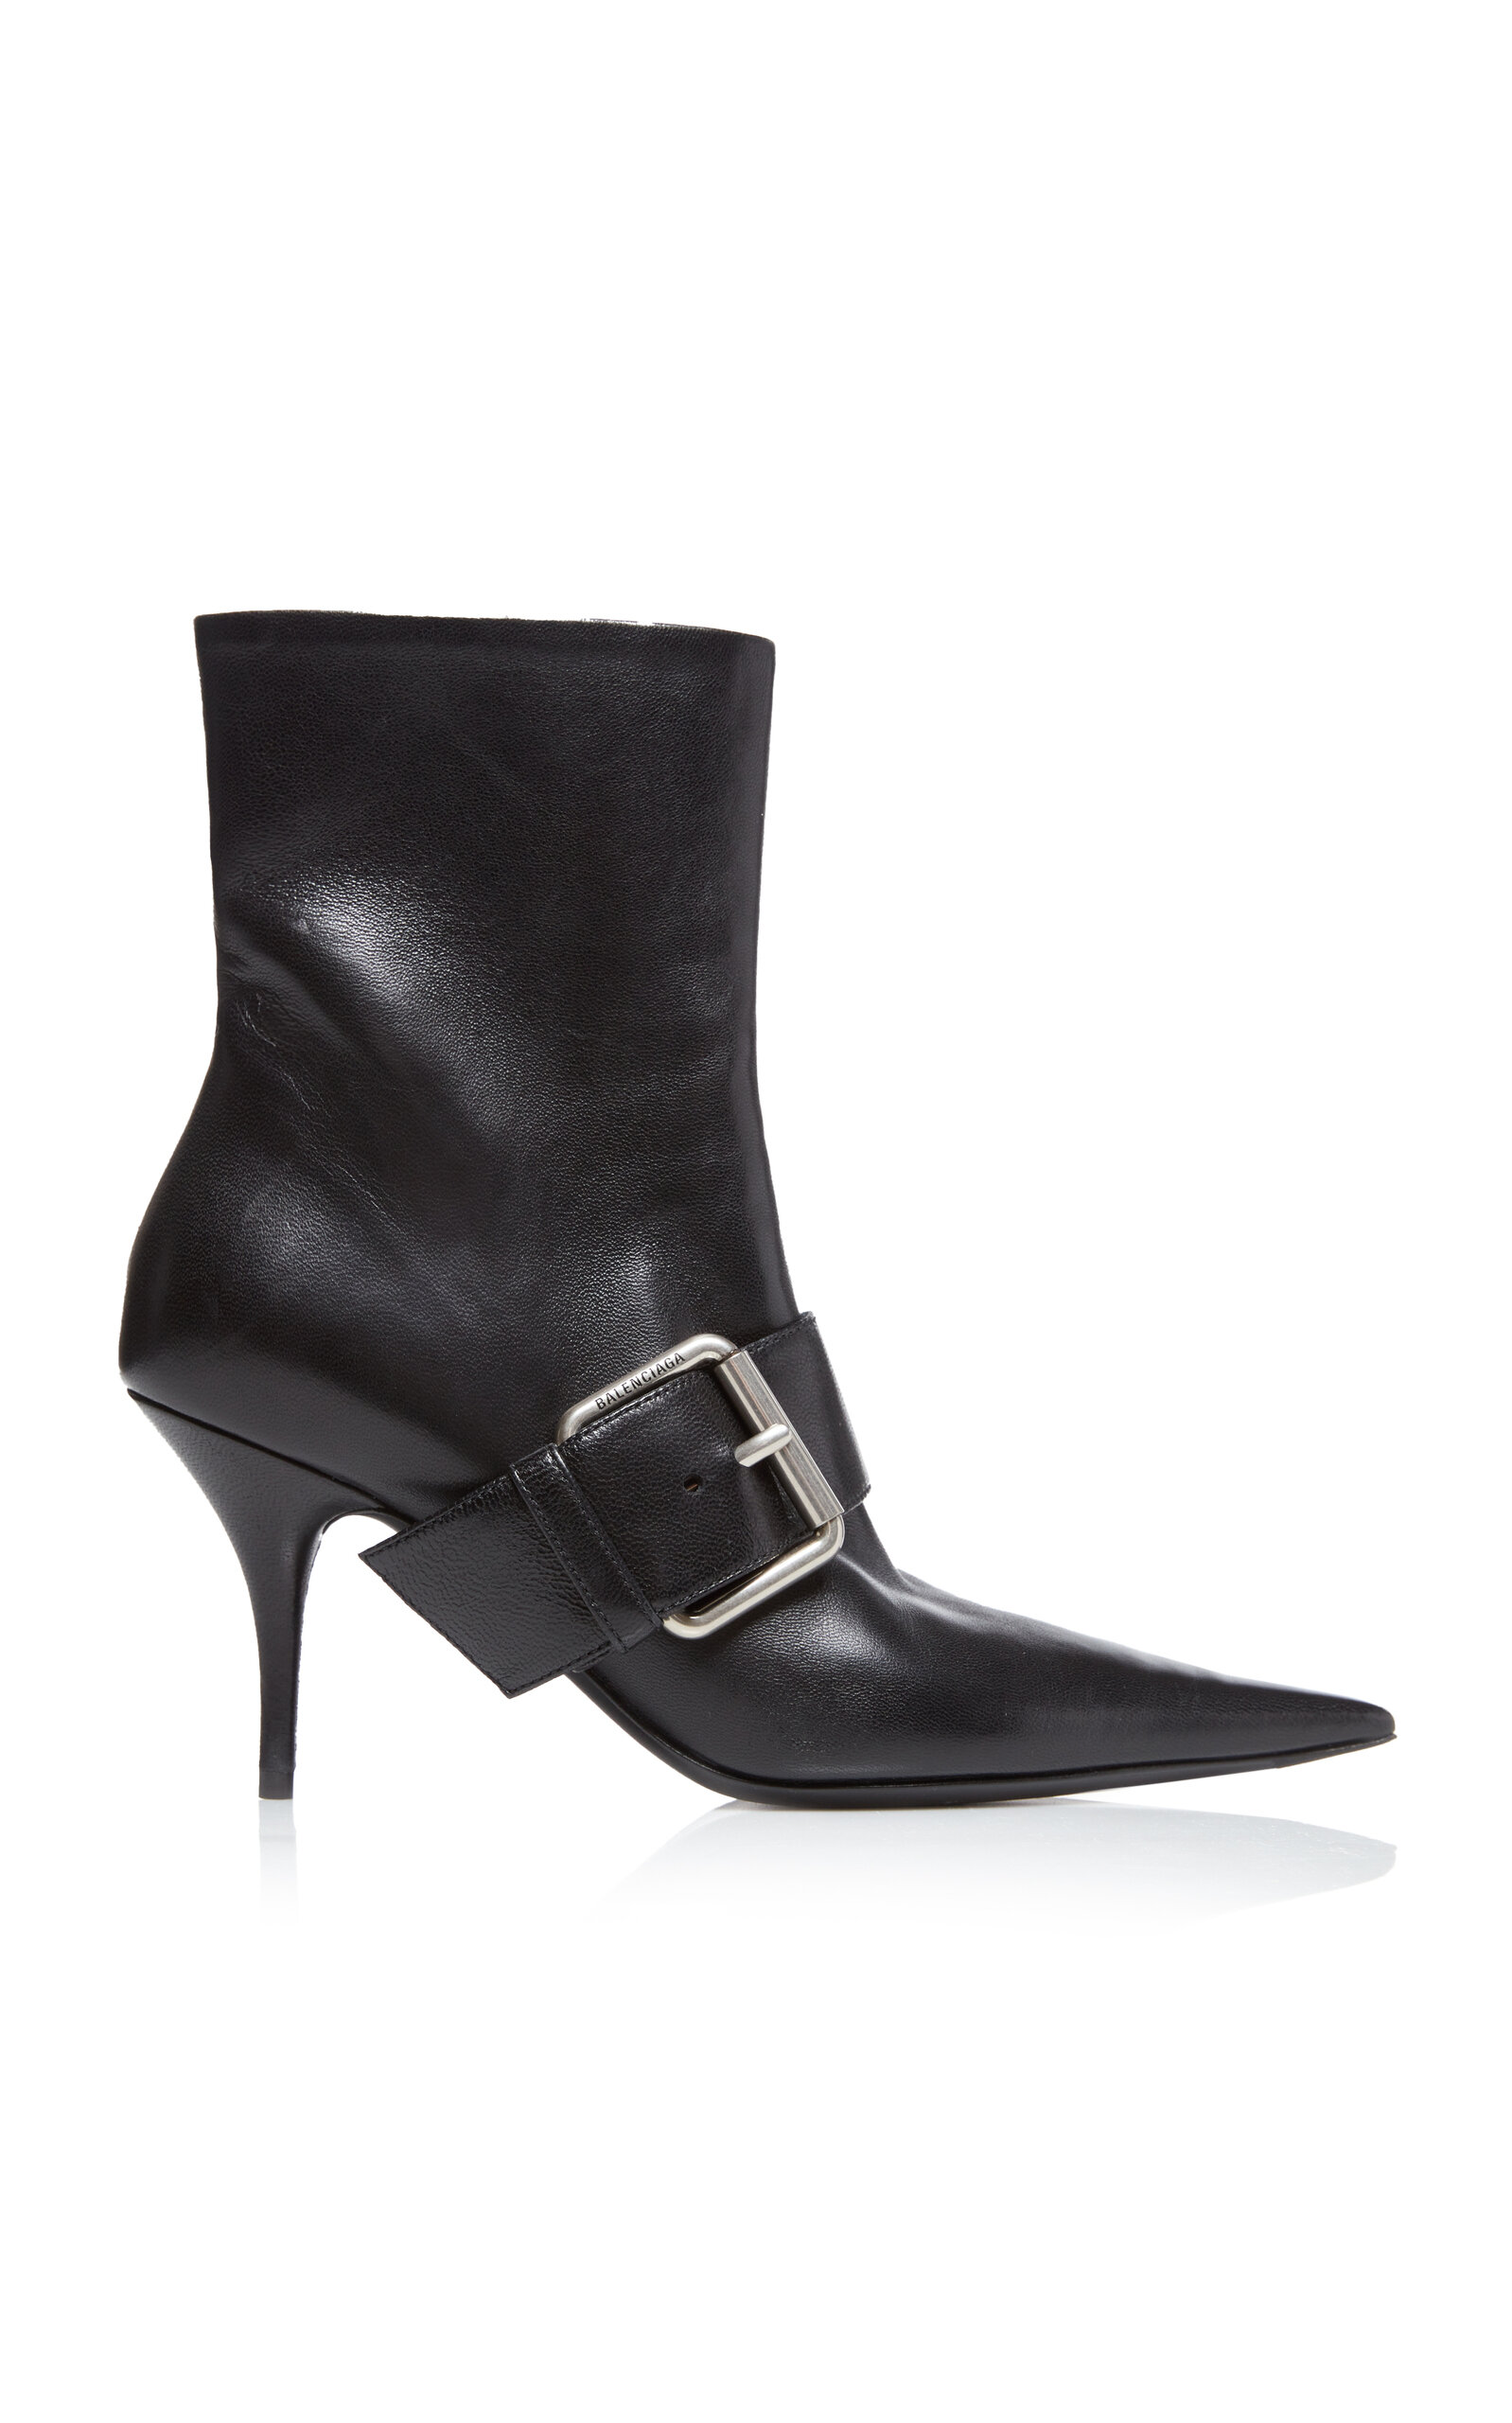 Balenciaga - Knife Buckle-Detailed Leather Ankle Boots - Black - IT 36 - Moda Operandi